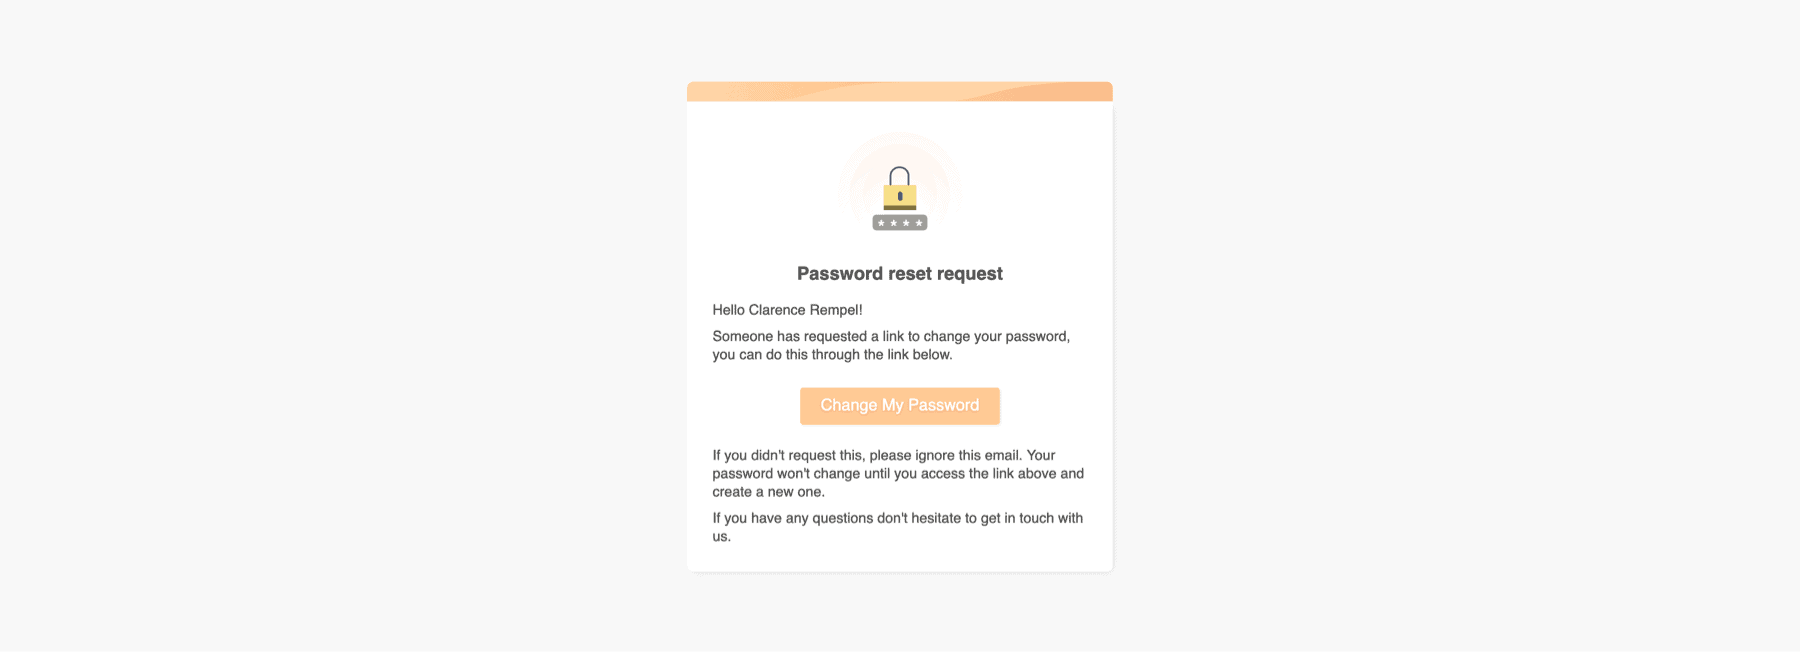 Password reset link email